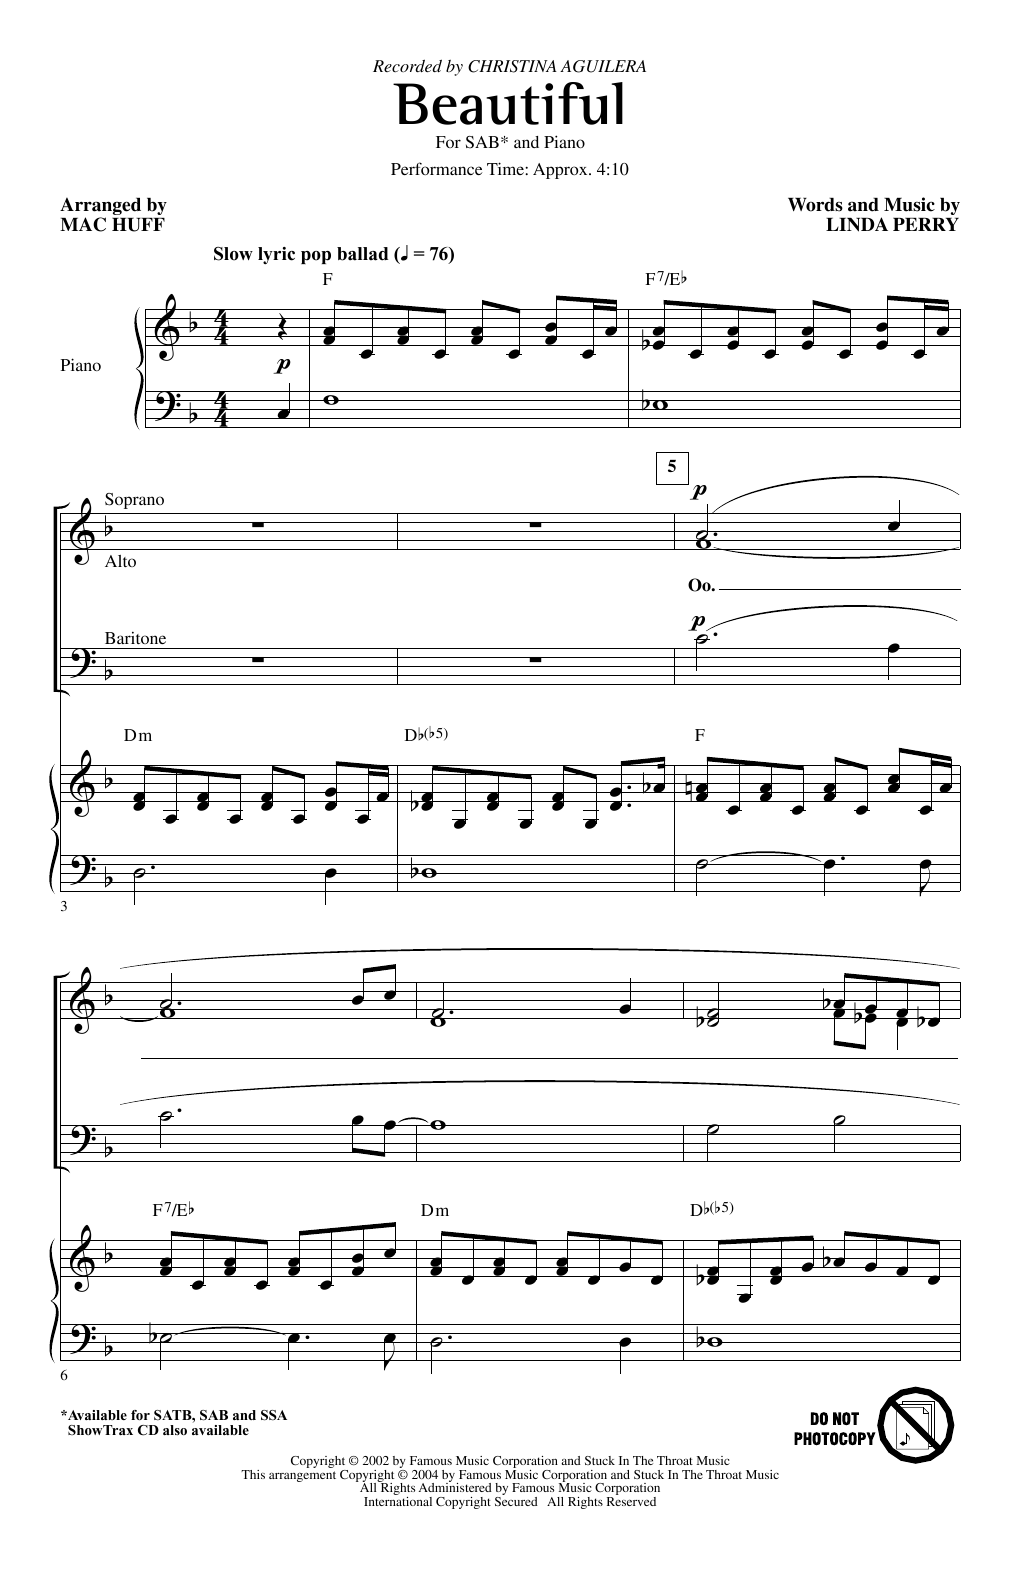 Christina Aguilera Beautiful (arr. Mac Huff) Sheet Music Notes & Chords for SAB Choir - Download or Print PDF